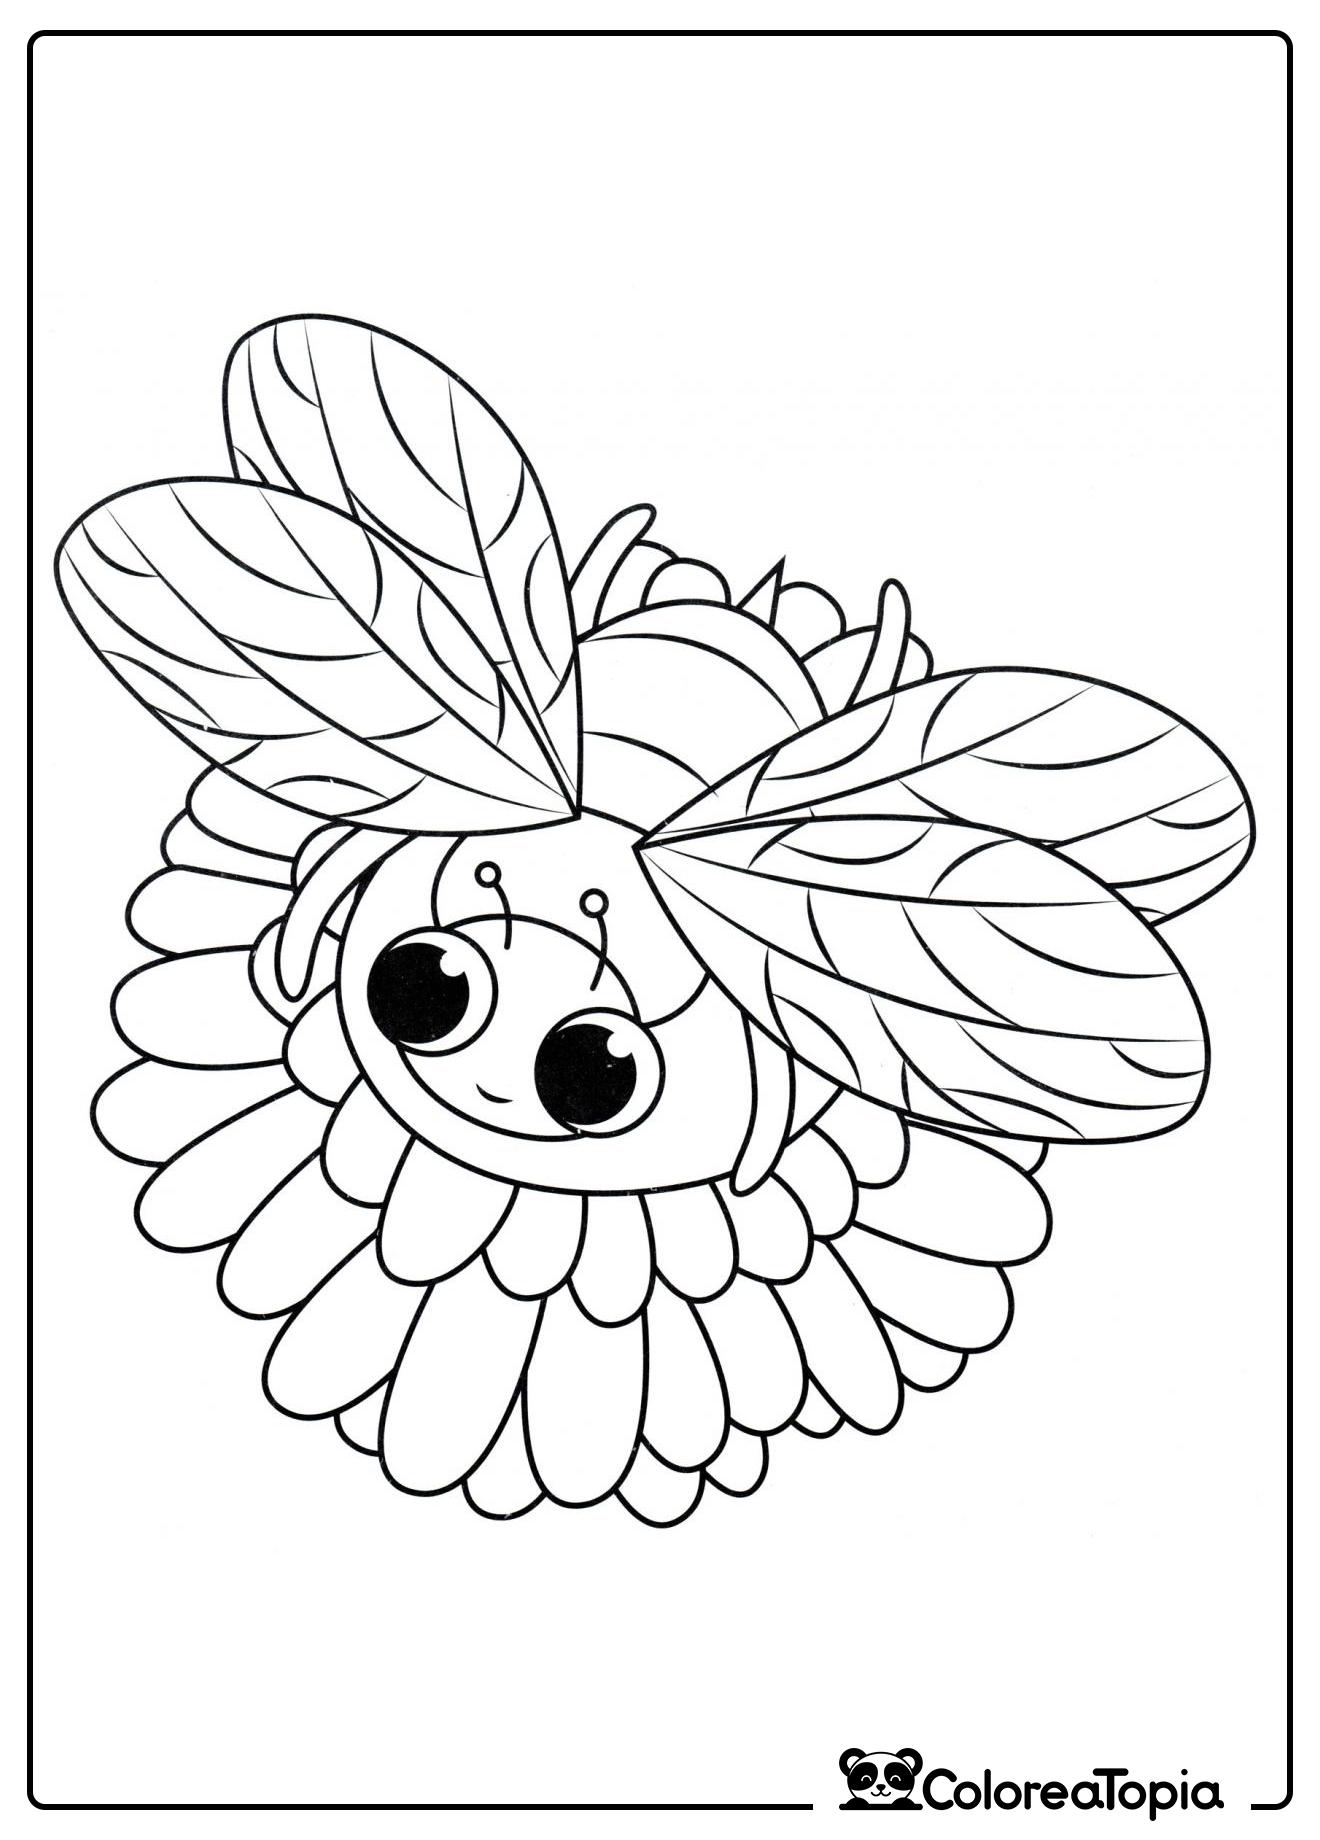 Abejita en la flor - dibujo para colorear